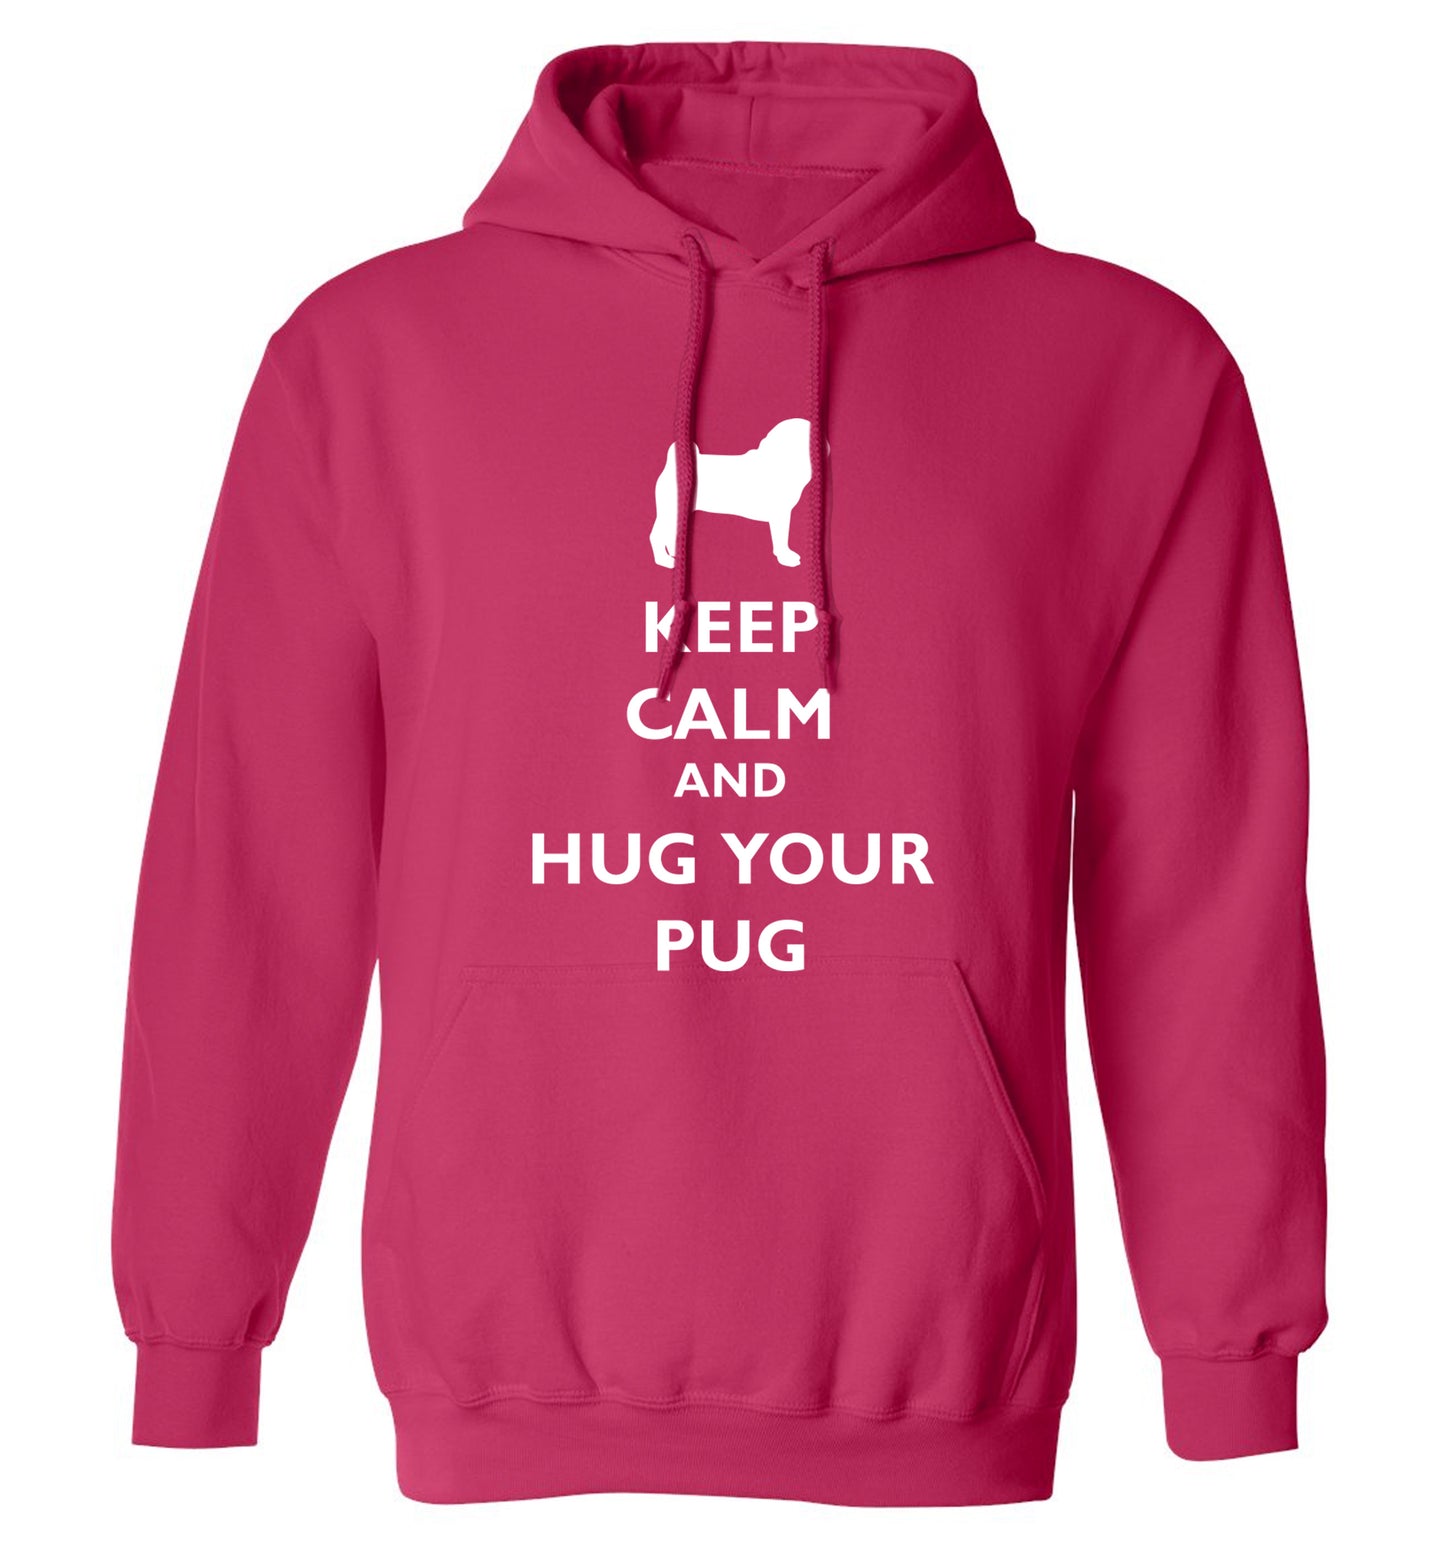 Keep calm and hug your pug adults unisex pink hoodie 2XL